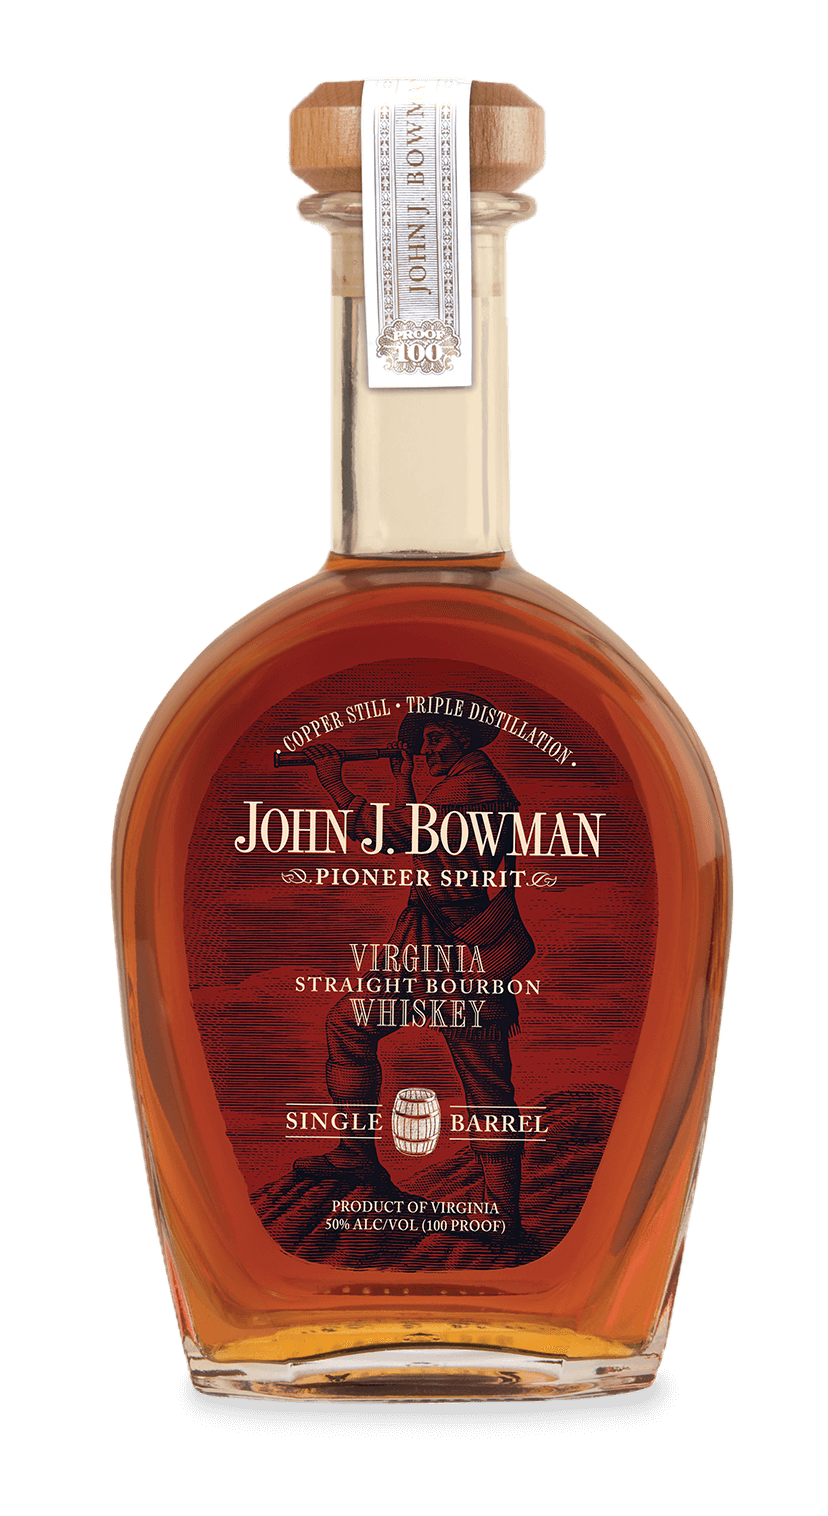 Buy John J. Bowman Single Barrel Bourbon Whiskey Online -Craft City